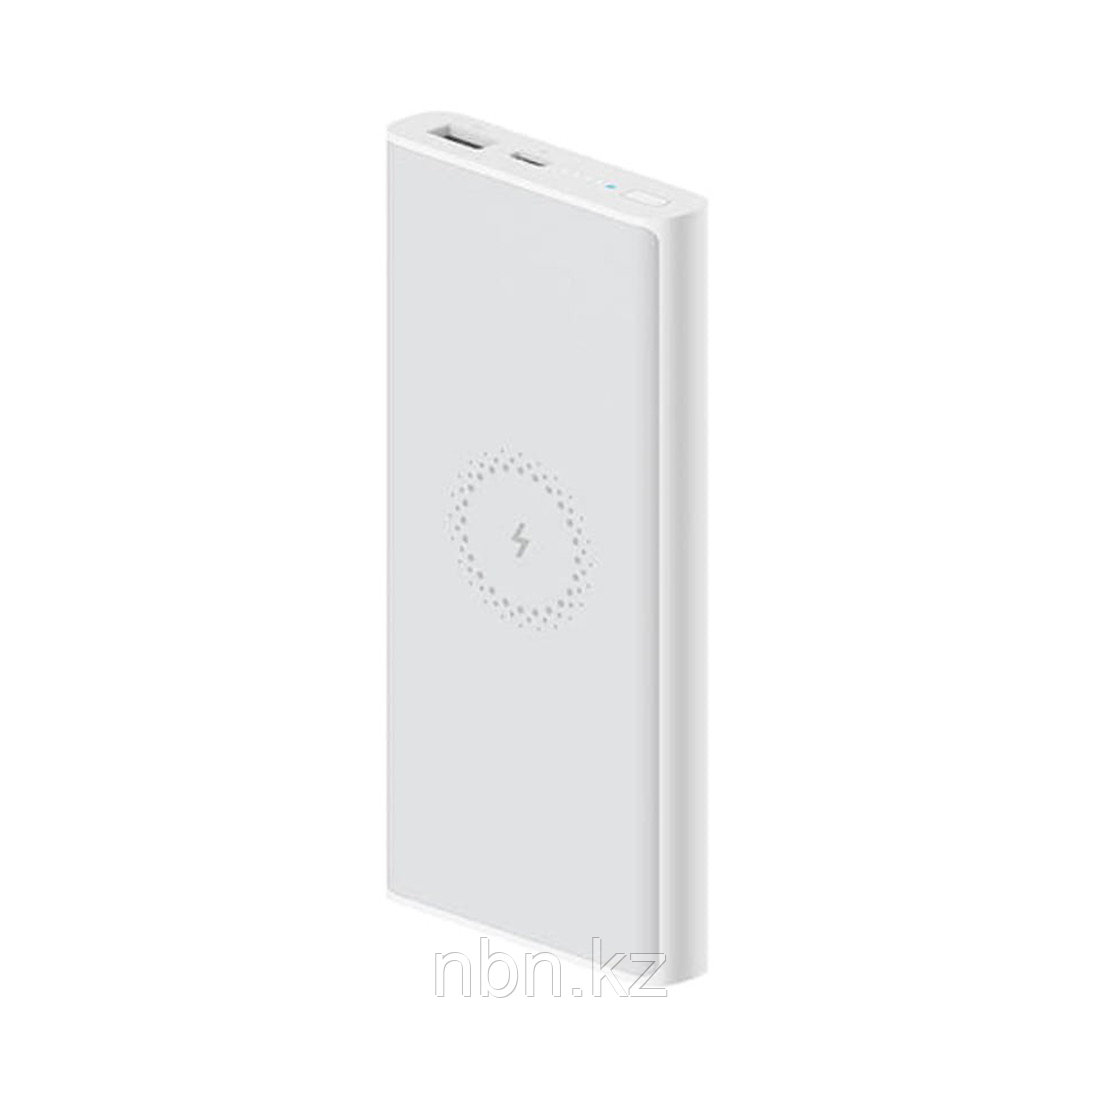 Портативное зарядное устройство Xiaomi Mi Power Bank 10000mAh Wireless Essential Белый, фото 1